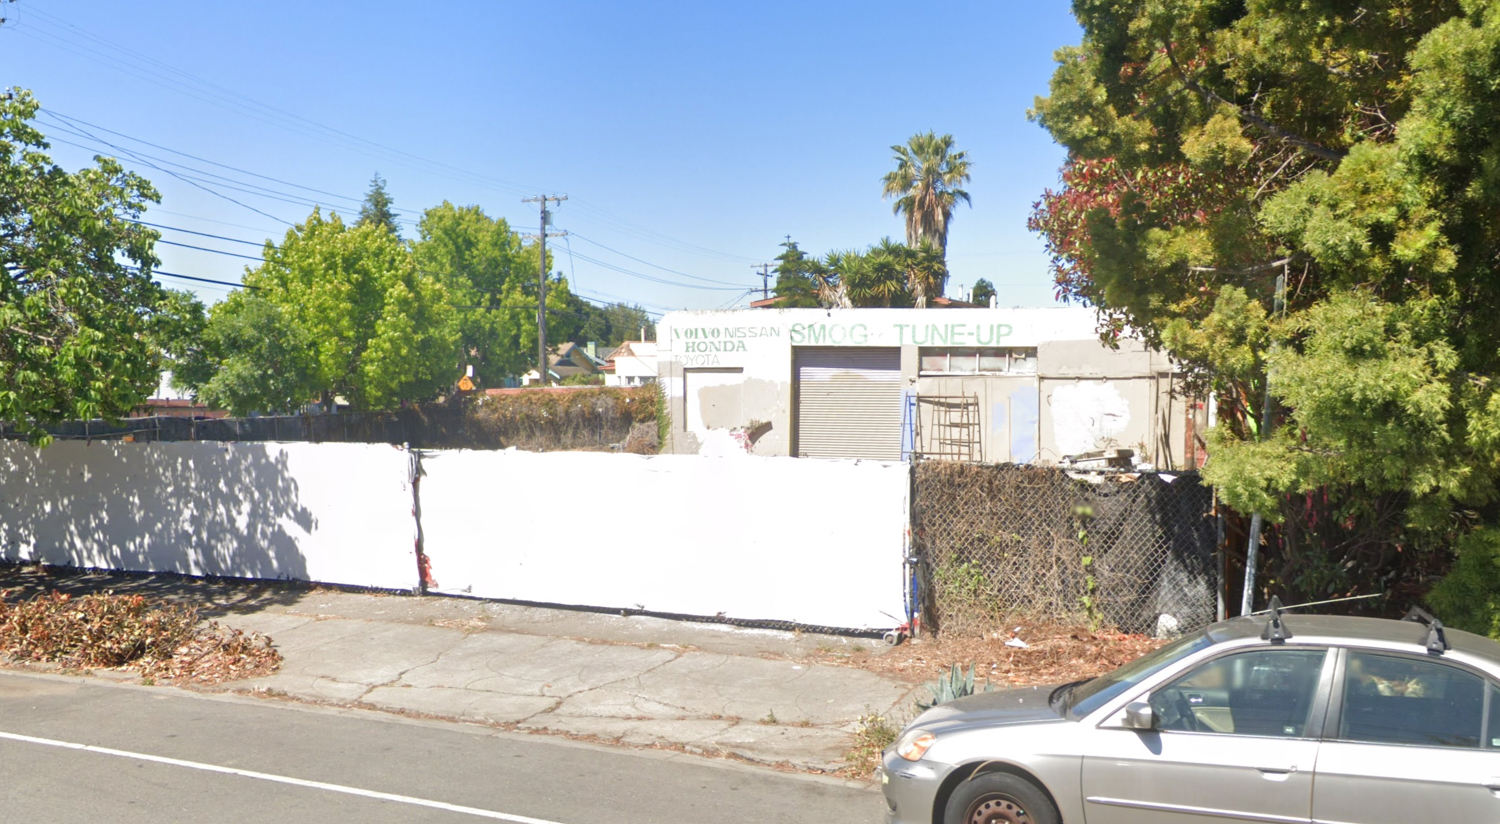 6501 Shattuck Avenue existing condition, image via Google Street View